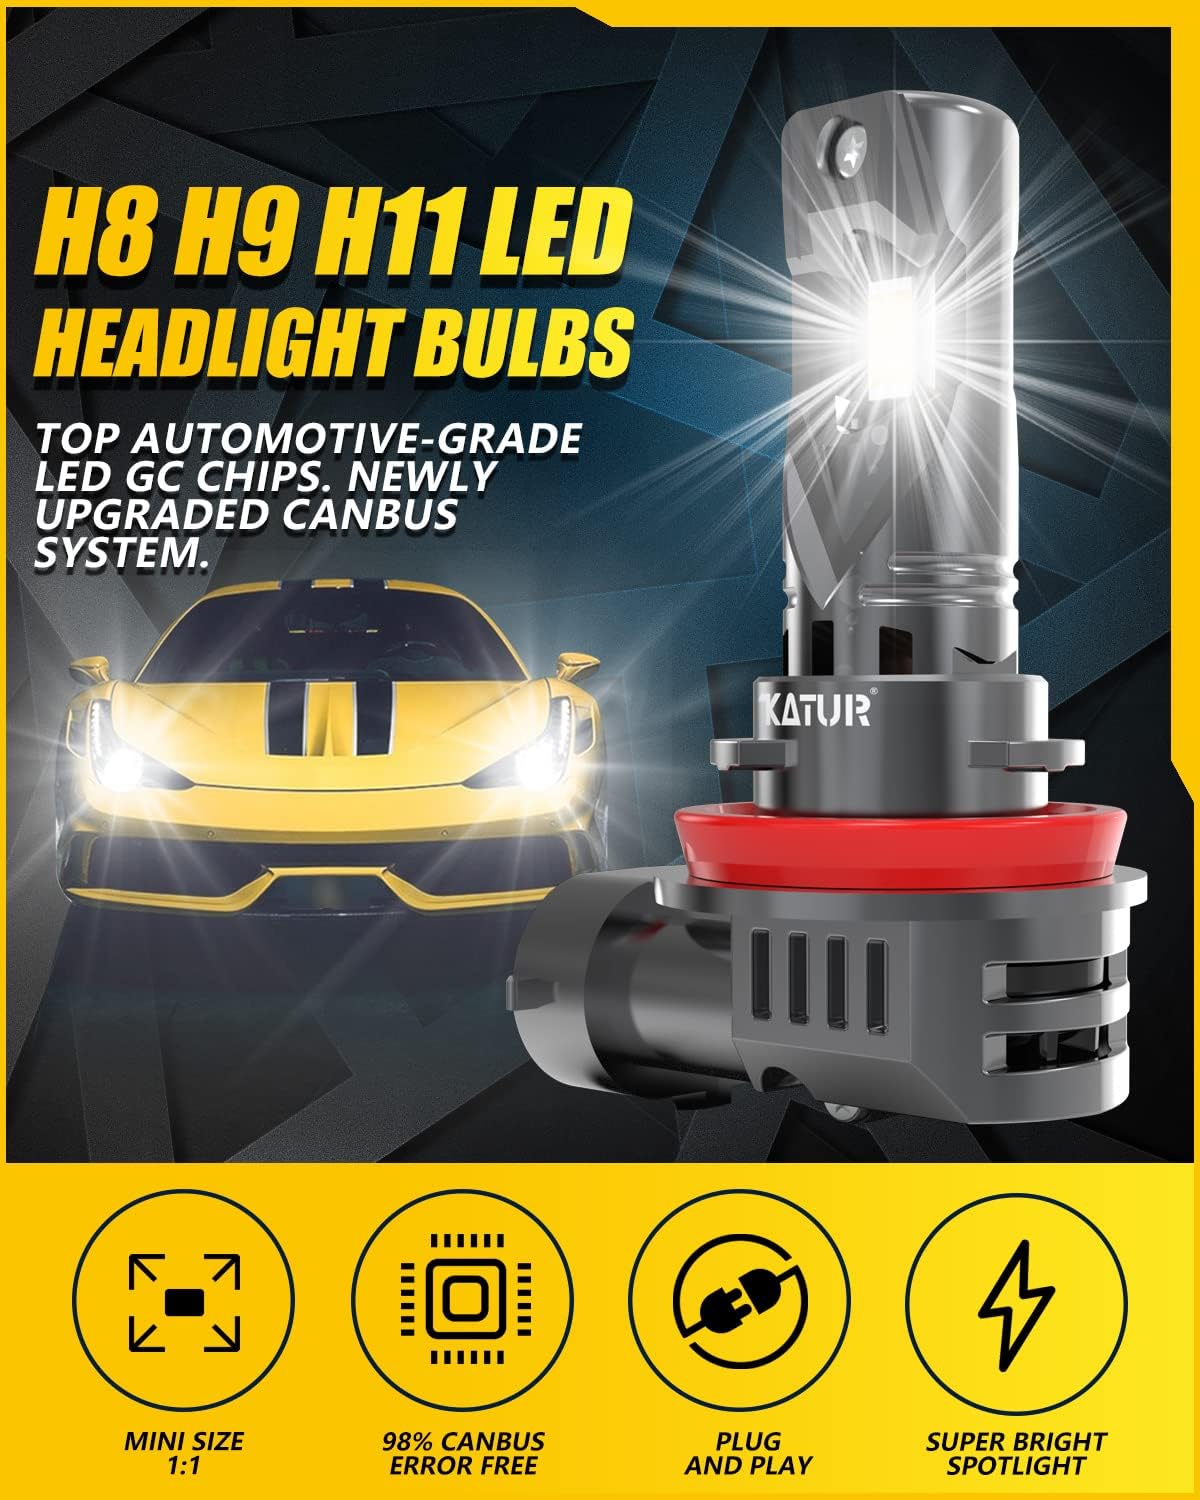 KATUR H11 LED Headlight Bulbs 20000LM 6000K Xenon White 1:1 Mini Size All-in-One Conversion Kit Plug and Play H9 H8 LED Fog Light Bulb, Pack of 2